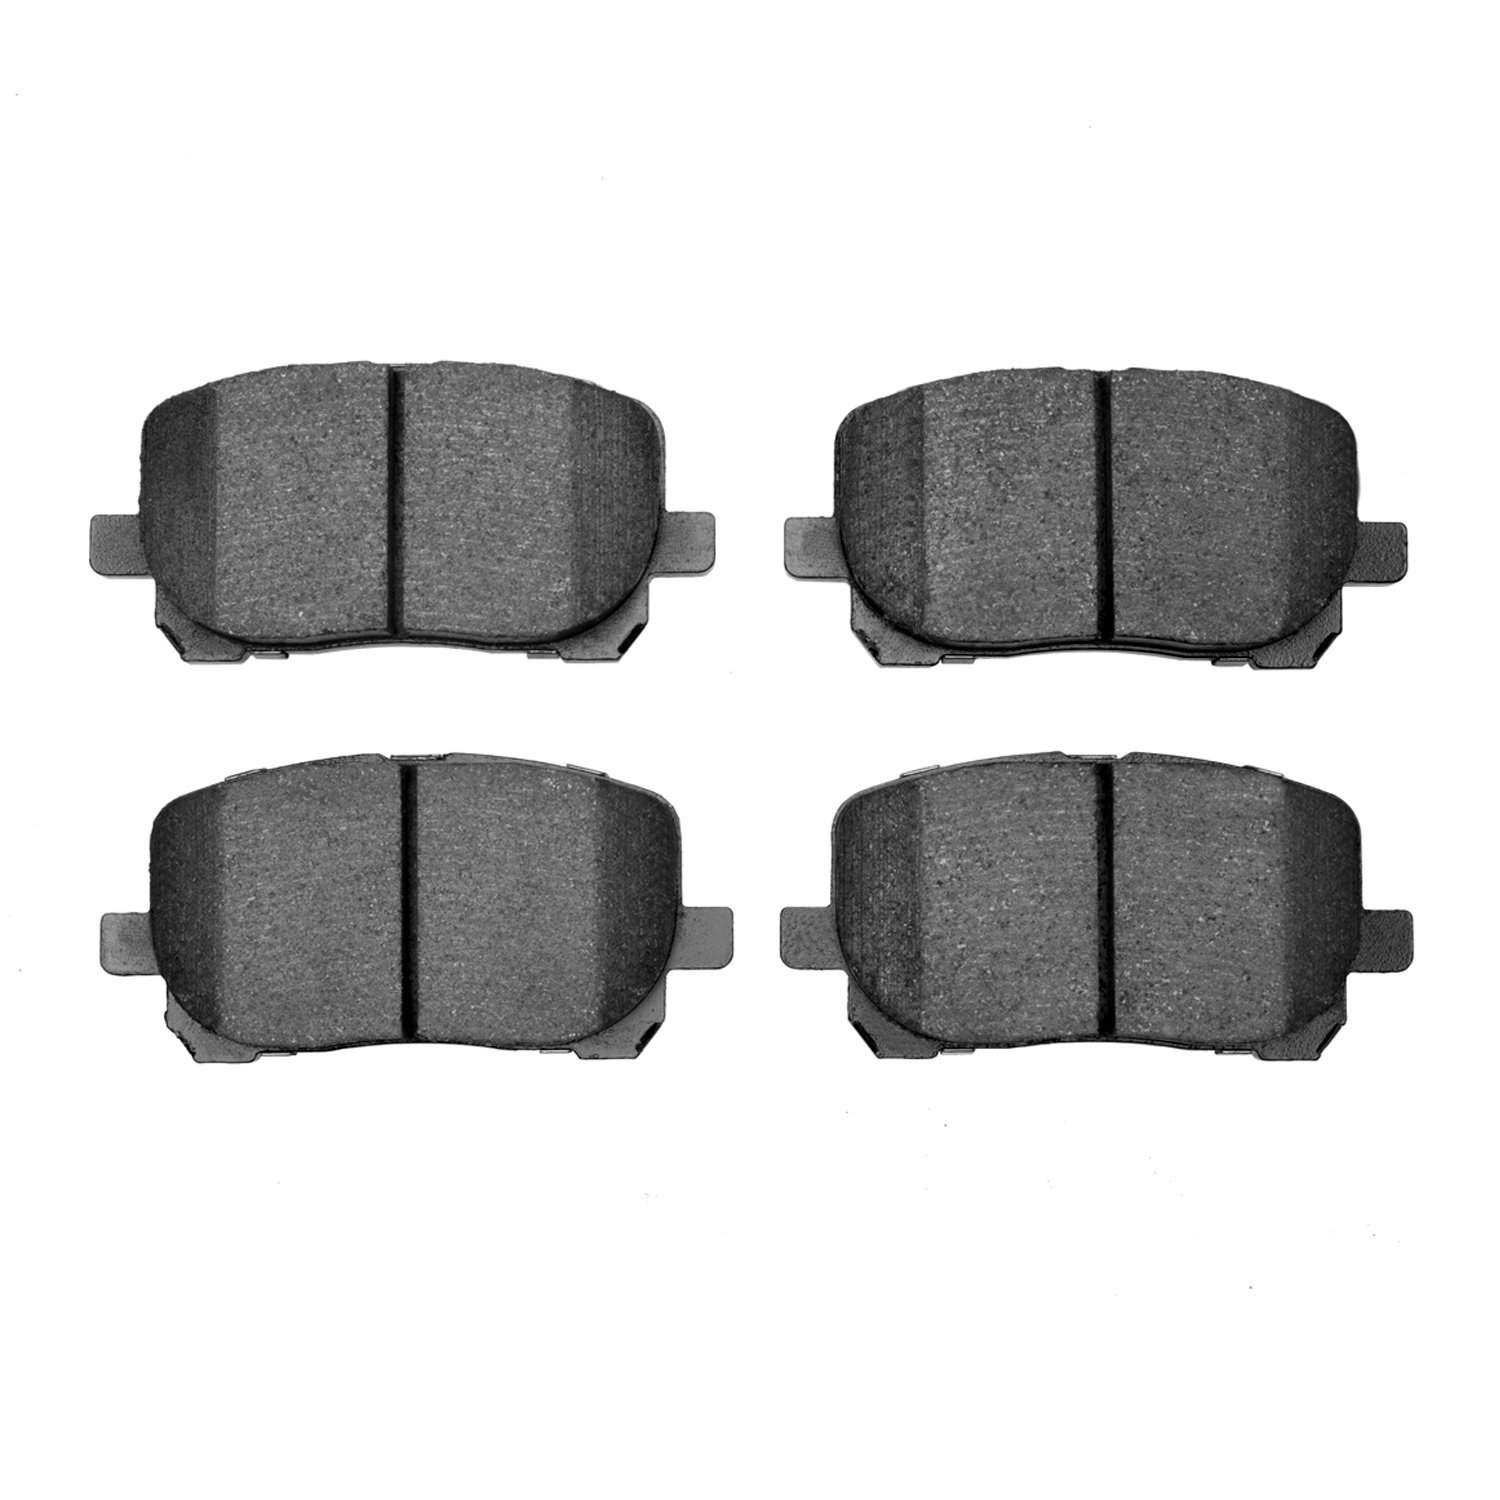 1551-0923-00 5000 Advanced Ceramic Brake Pads, 2003-2008 Multiple Makes/Models, Position: Front